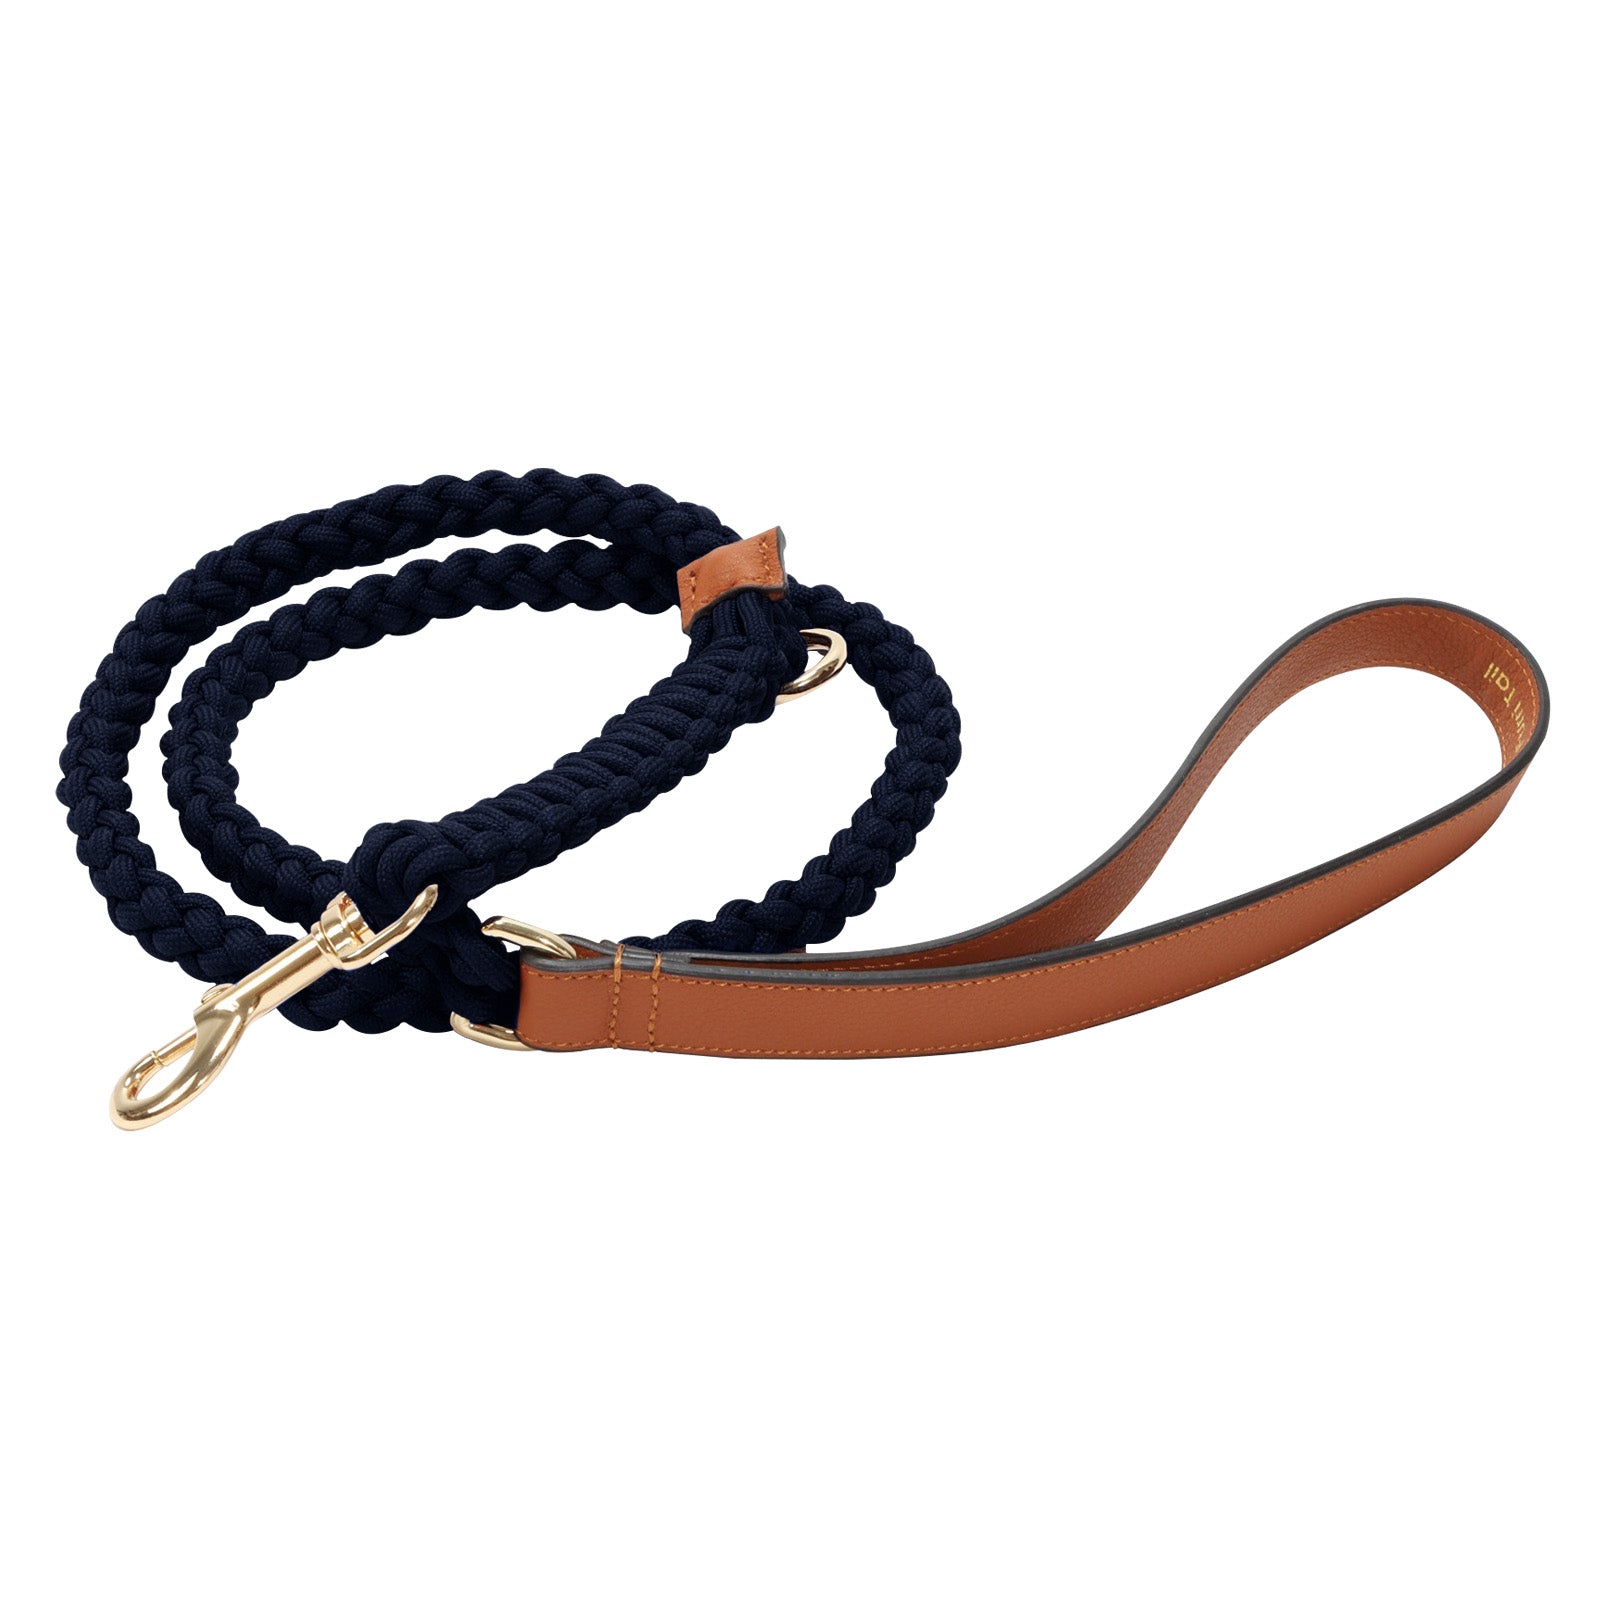  Premium Leather Navy Blue Dog Leash